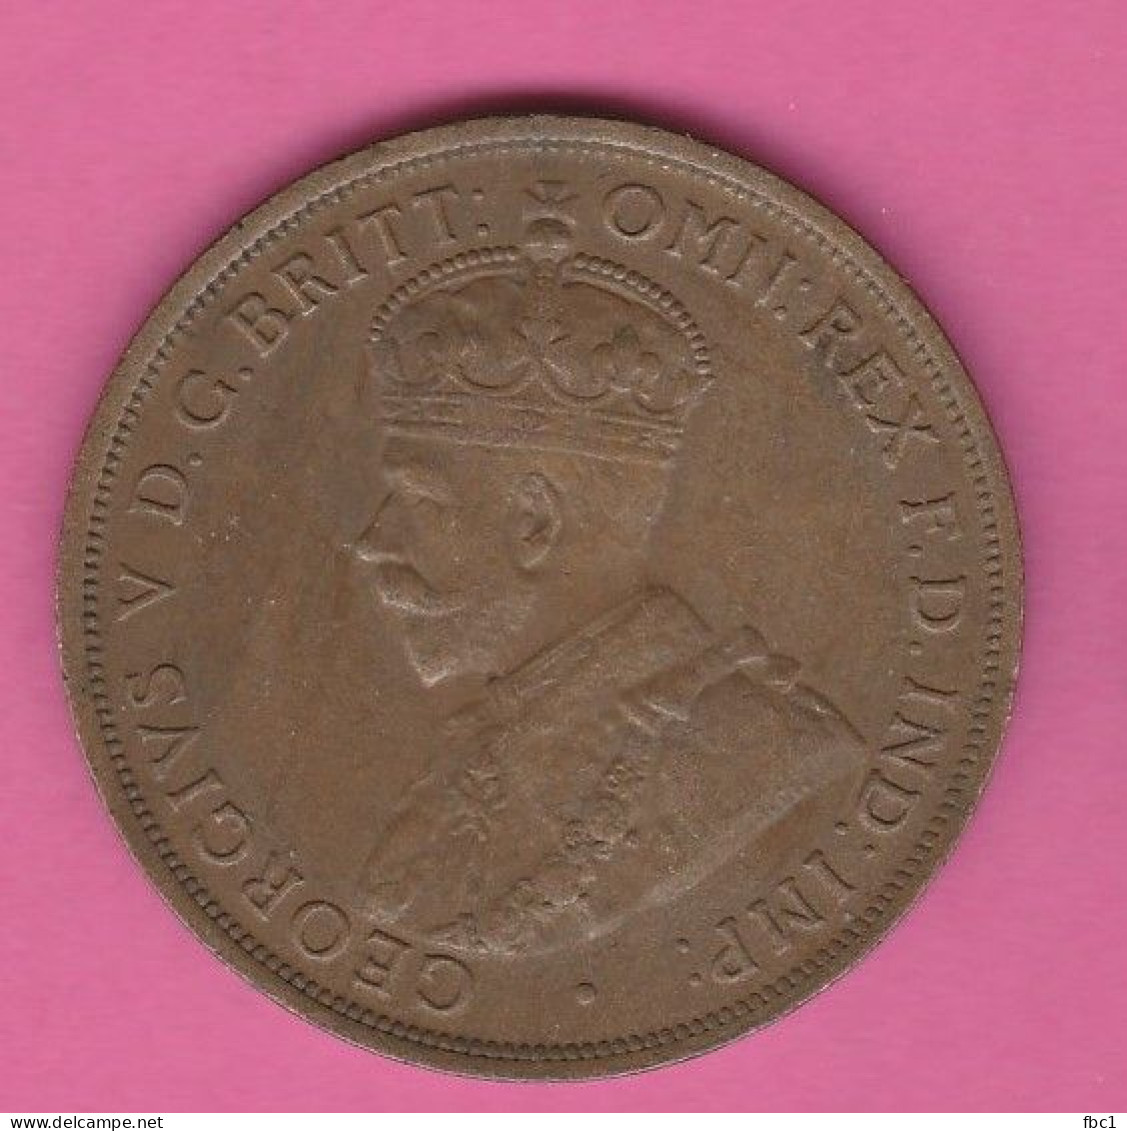 Australia - One Penny 1914 - George V - Penny